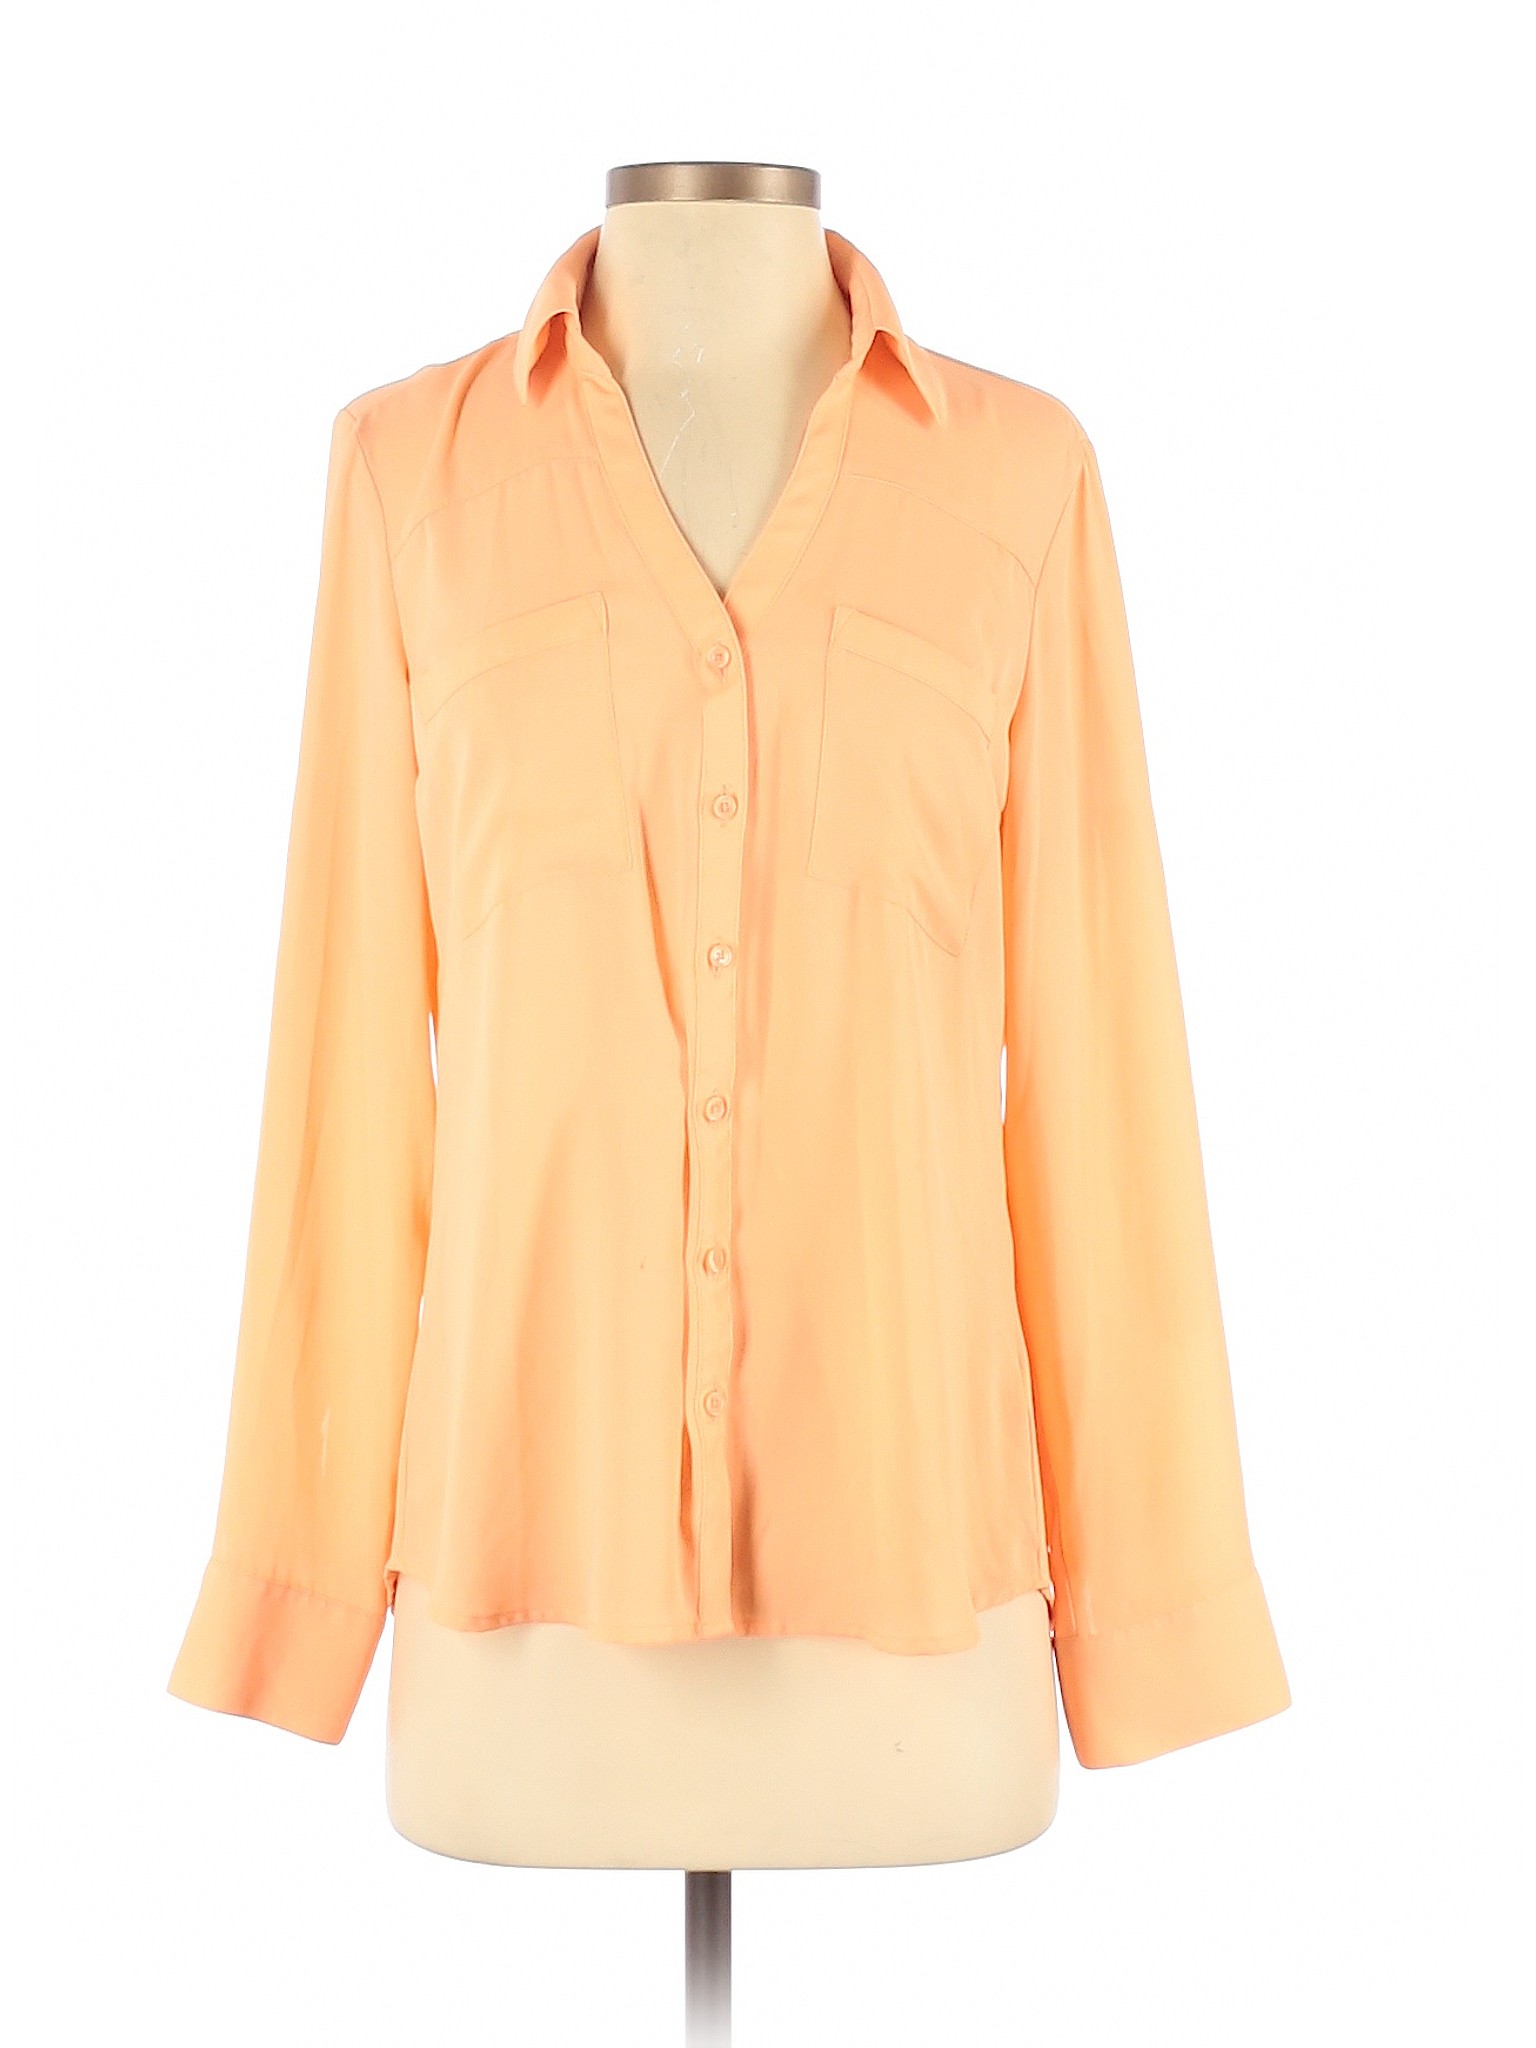 Express Women Orange Long Sleeve Blouse S | eBay